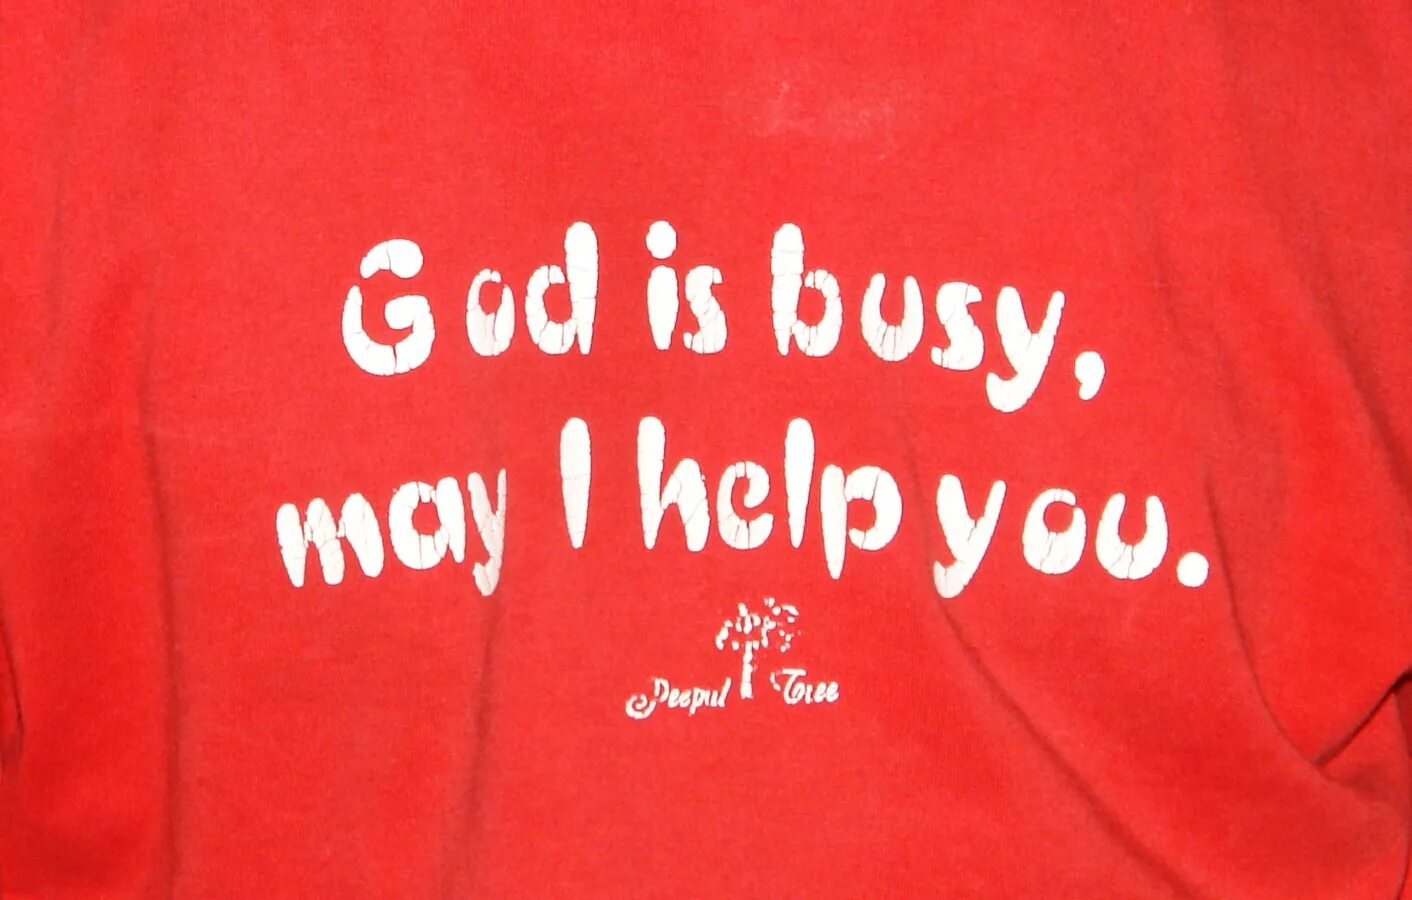 May can i help you. God is busy can i help you плакат. How May i help you. God is busy can i help you футболка. Куртка God is busy can i help you.